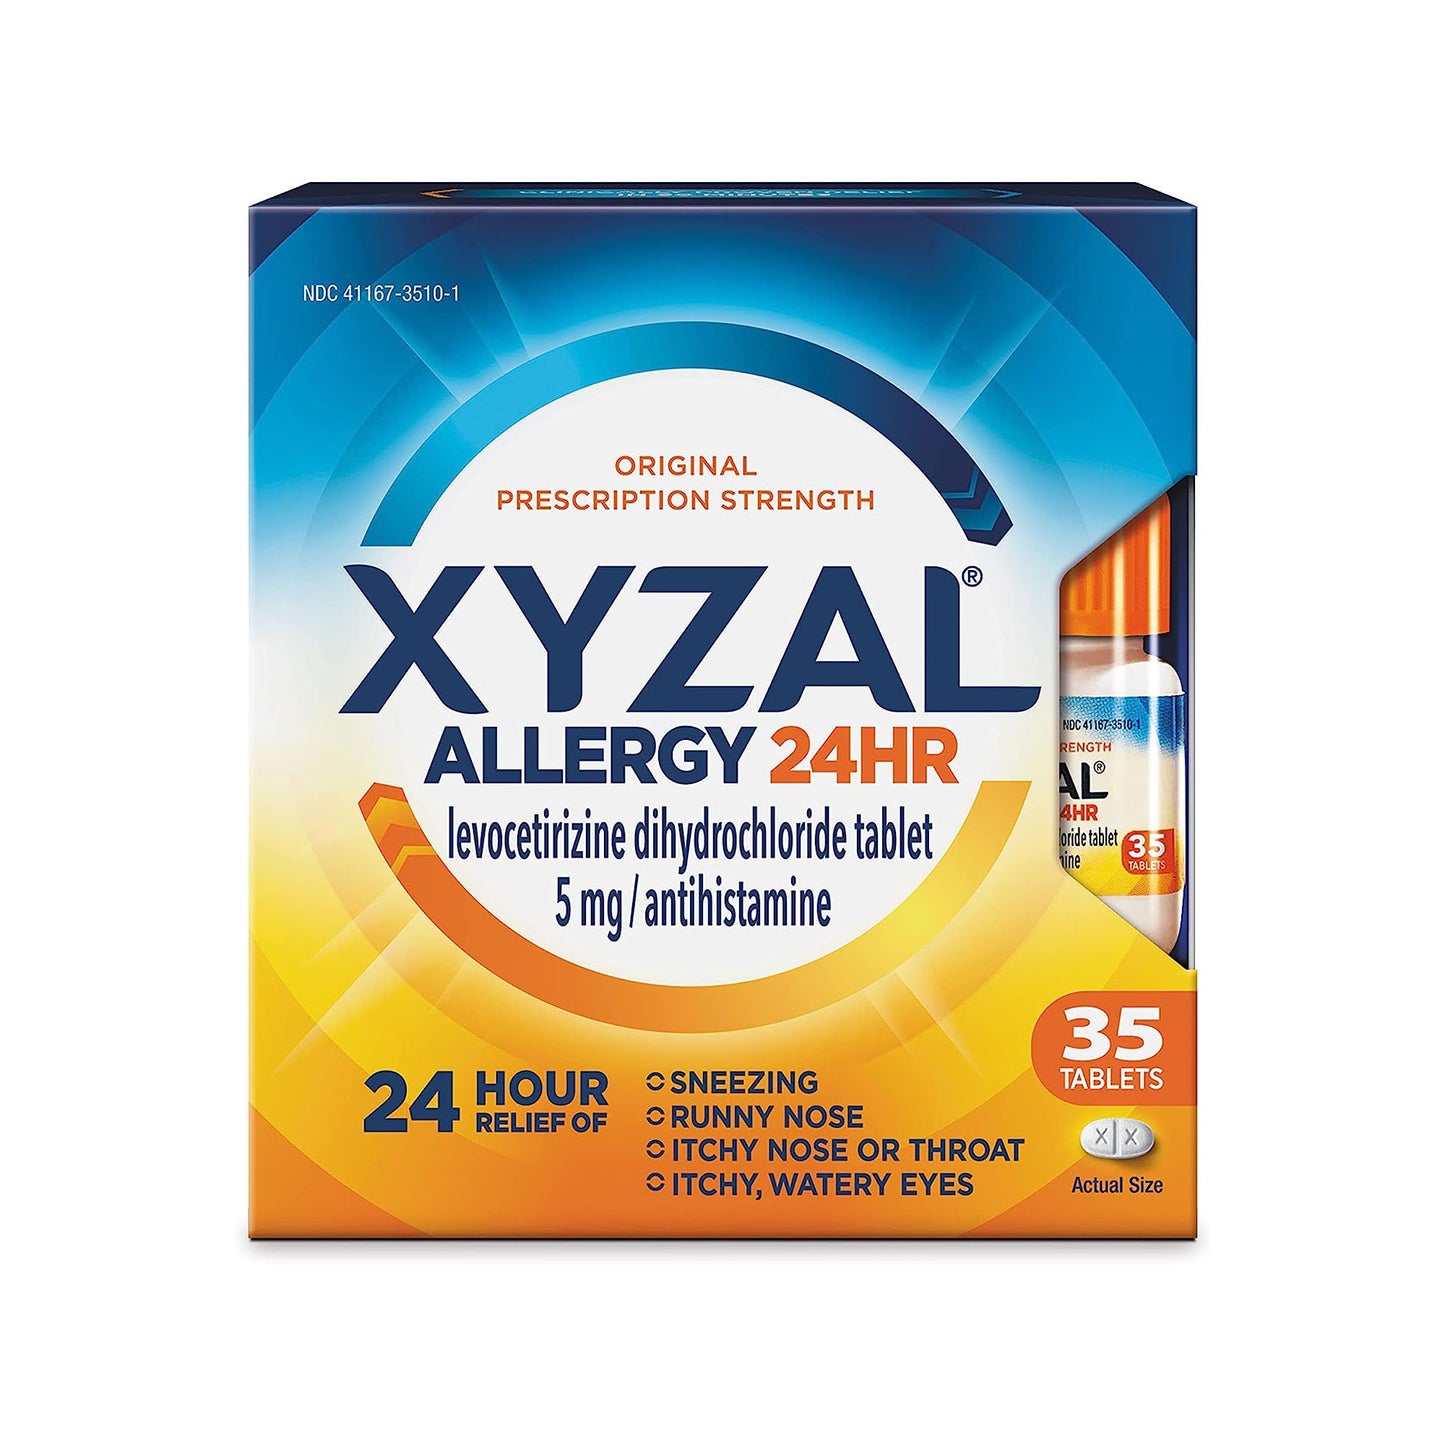 Xyzal Allergy 24HR 5 mg Strength tablets, 35 ct